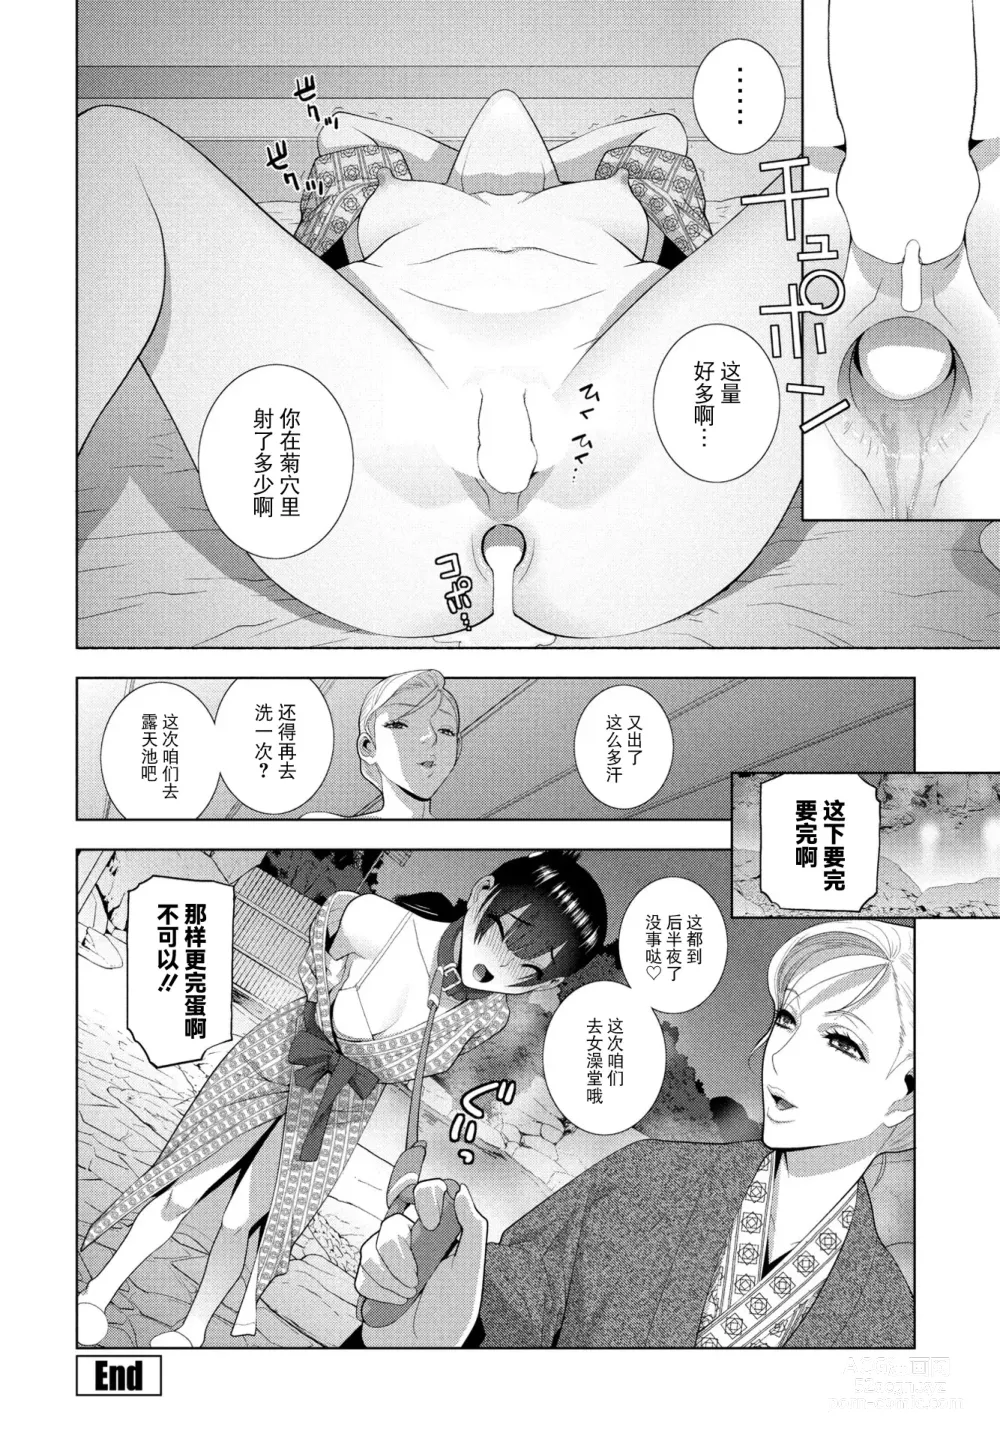 Page 19 of manga Imouto to Ani no Onsen Jijou